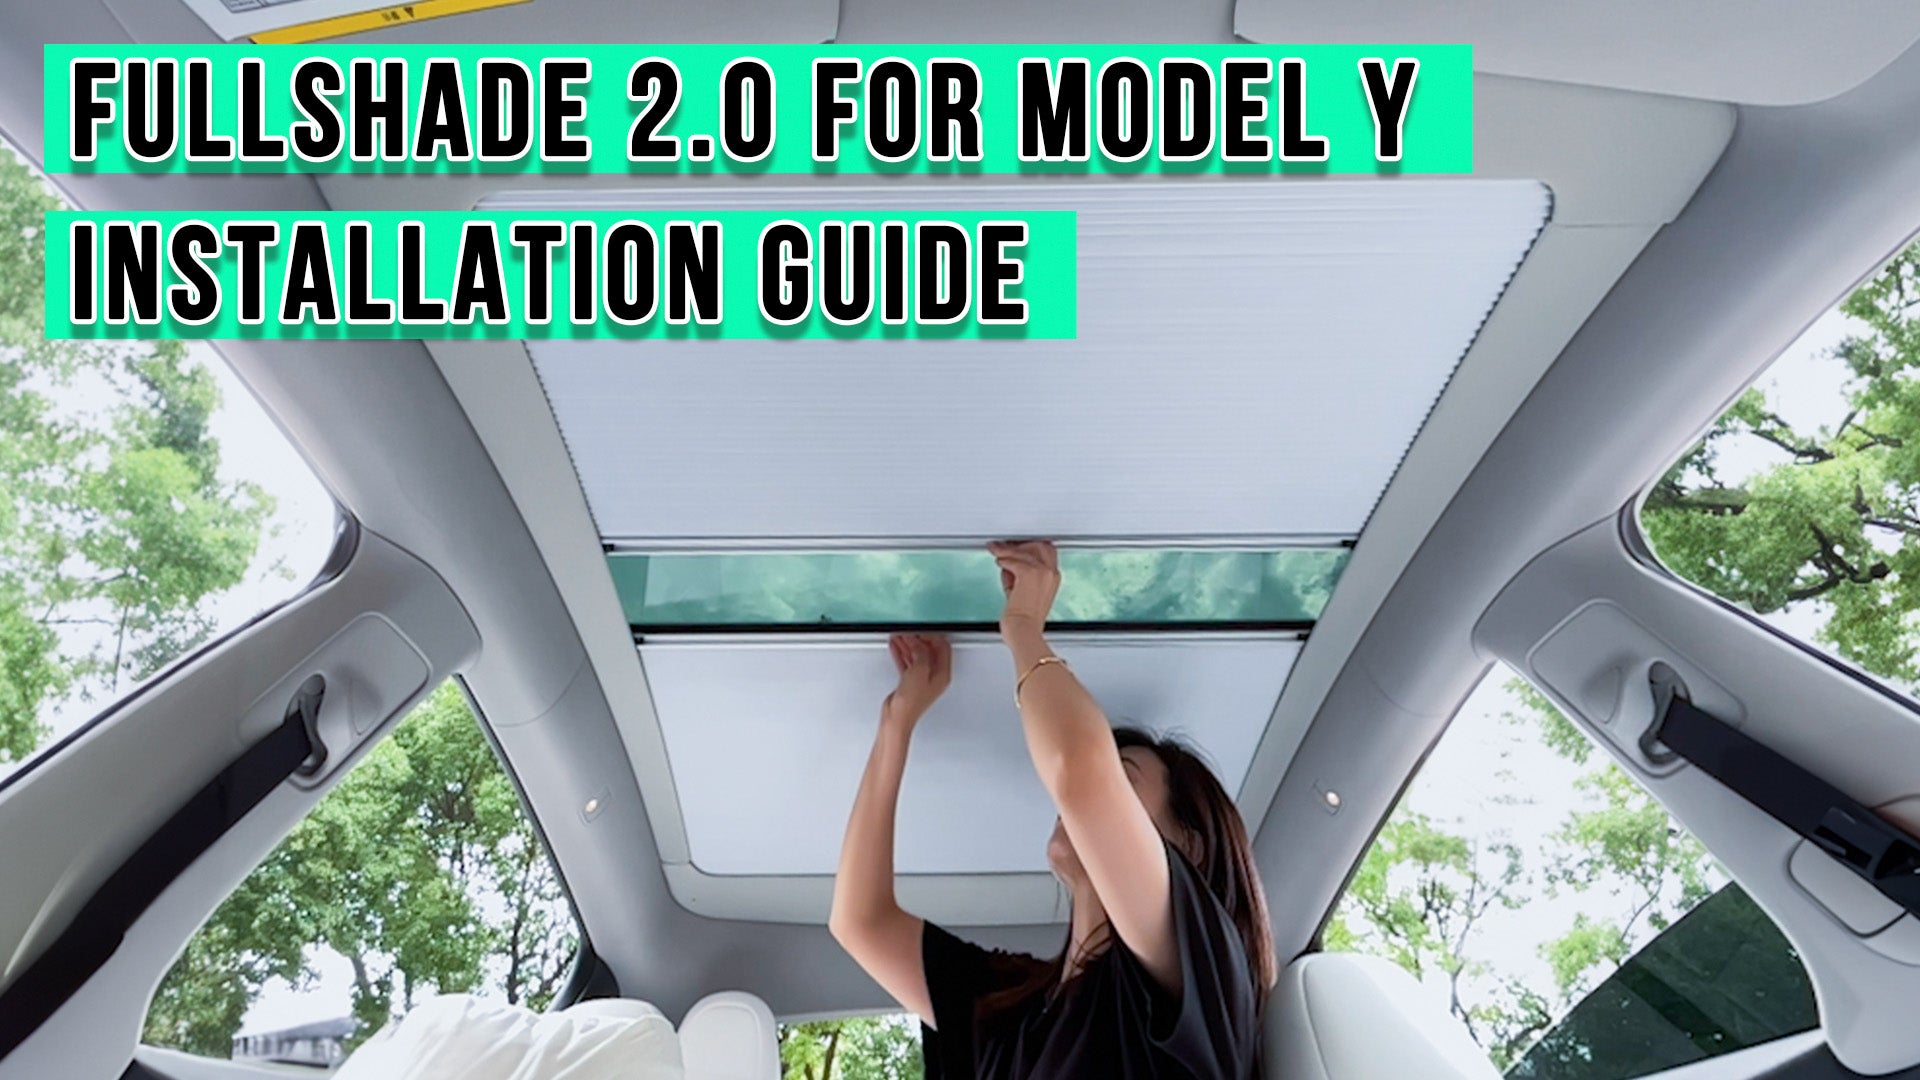 FullShade 2.0 for Model Y Installation Guide